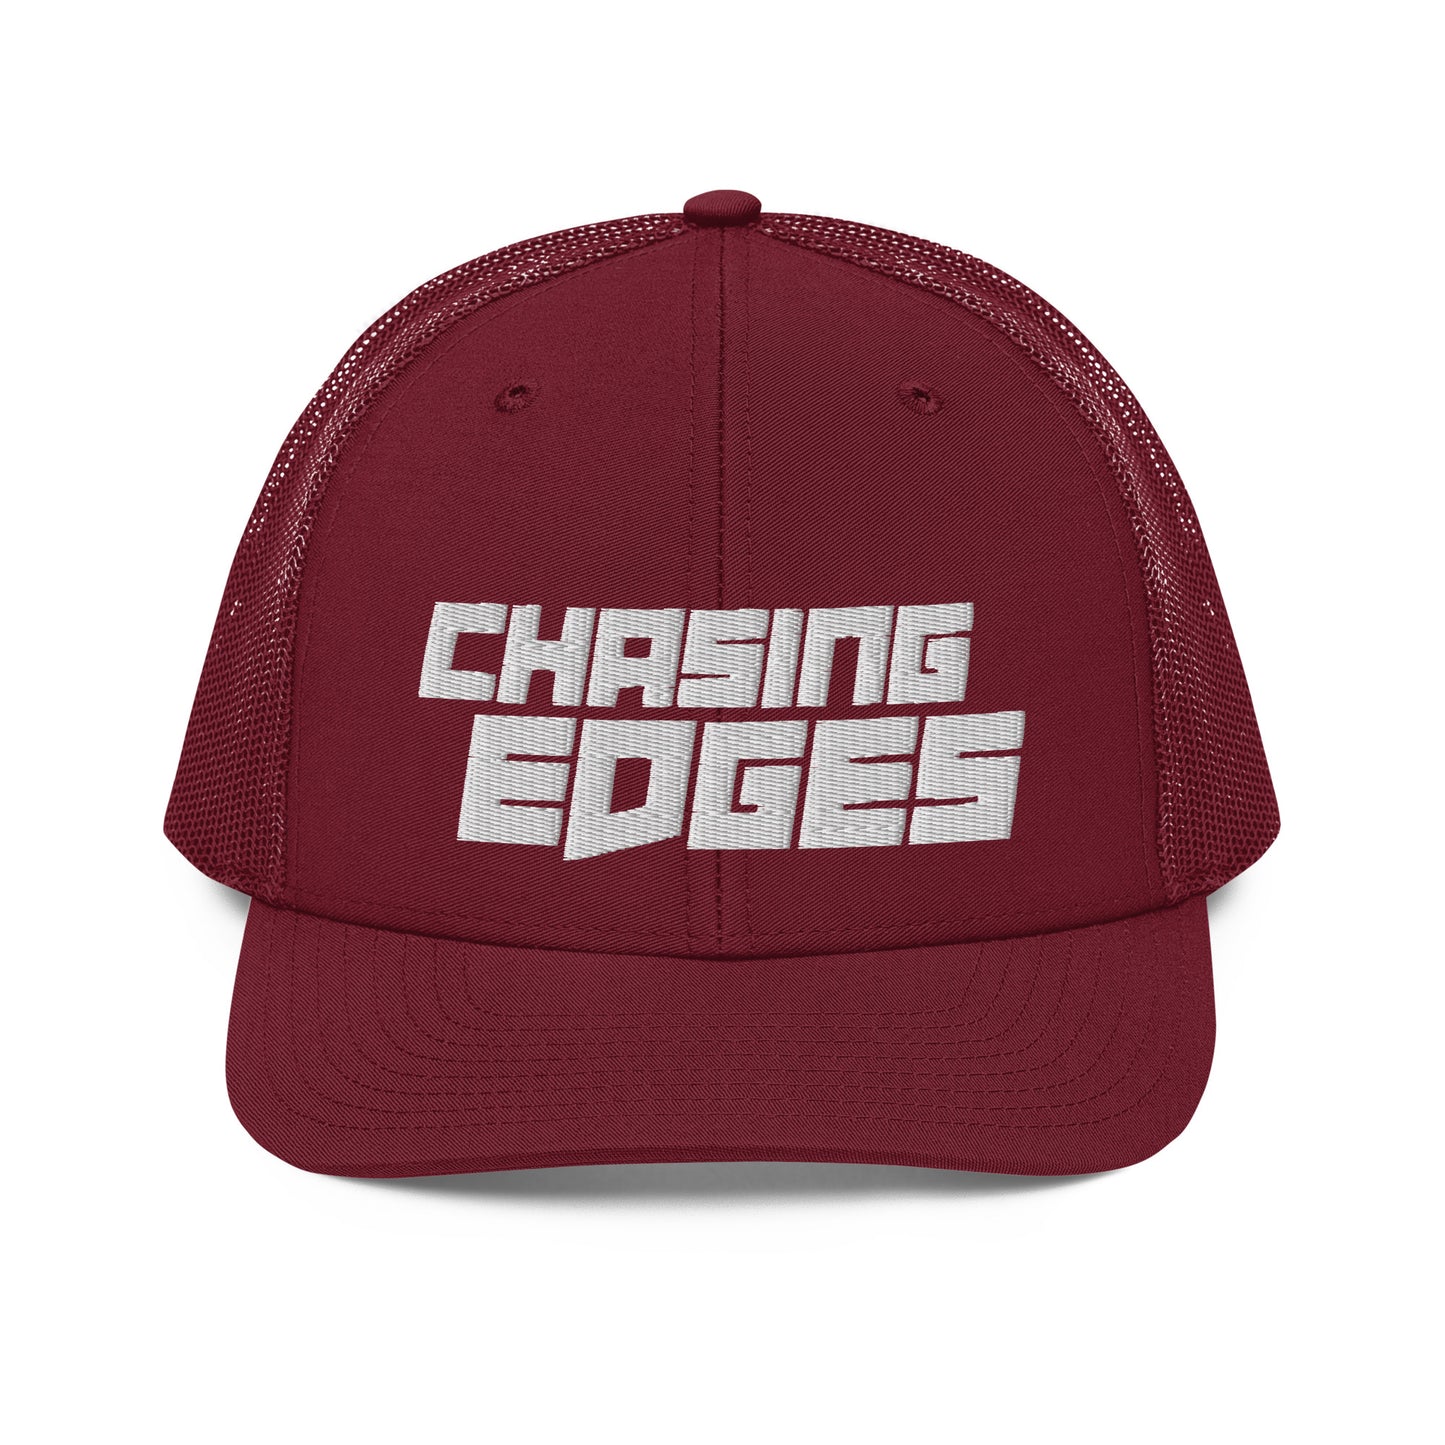 CHASING EDGES LOGO TRUCKER HAT (MORE COLORS)